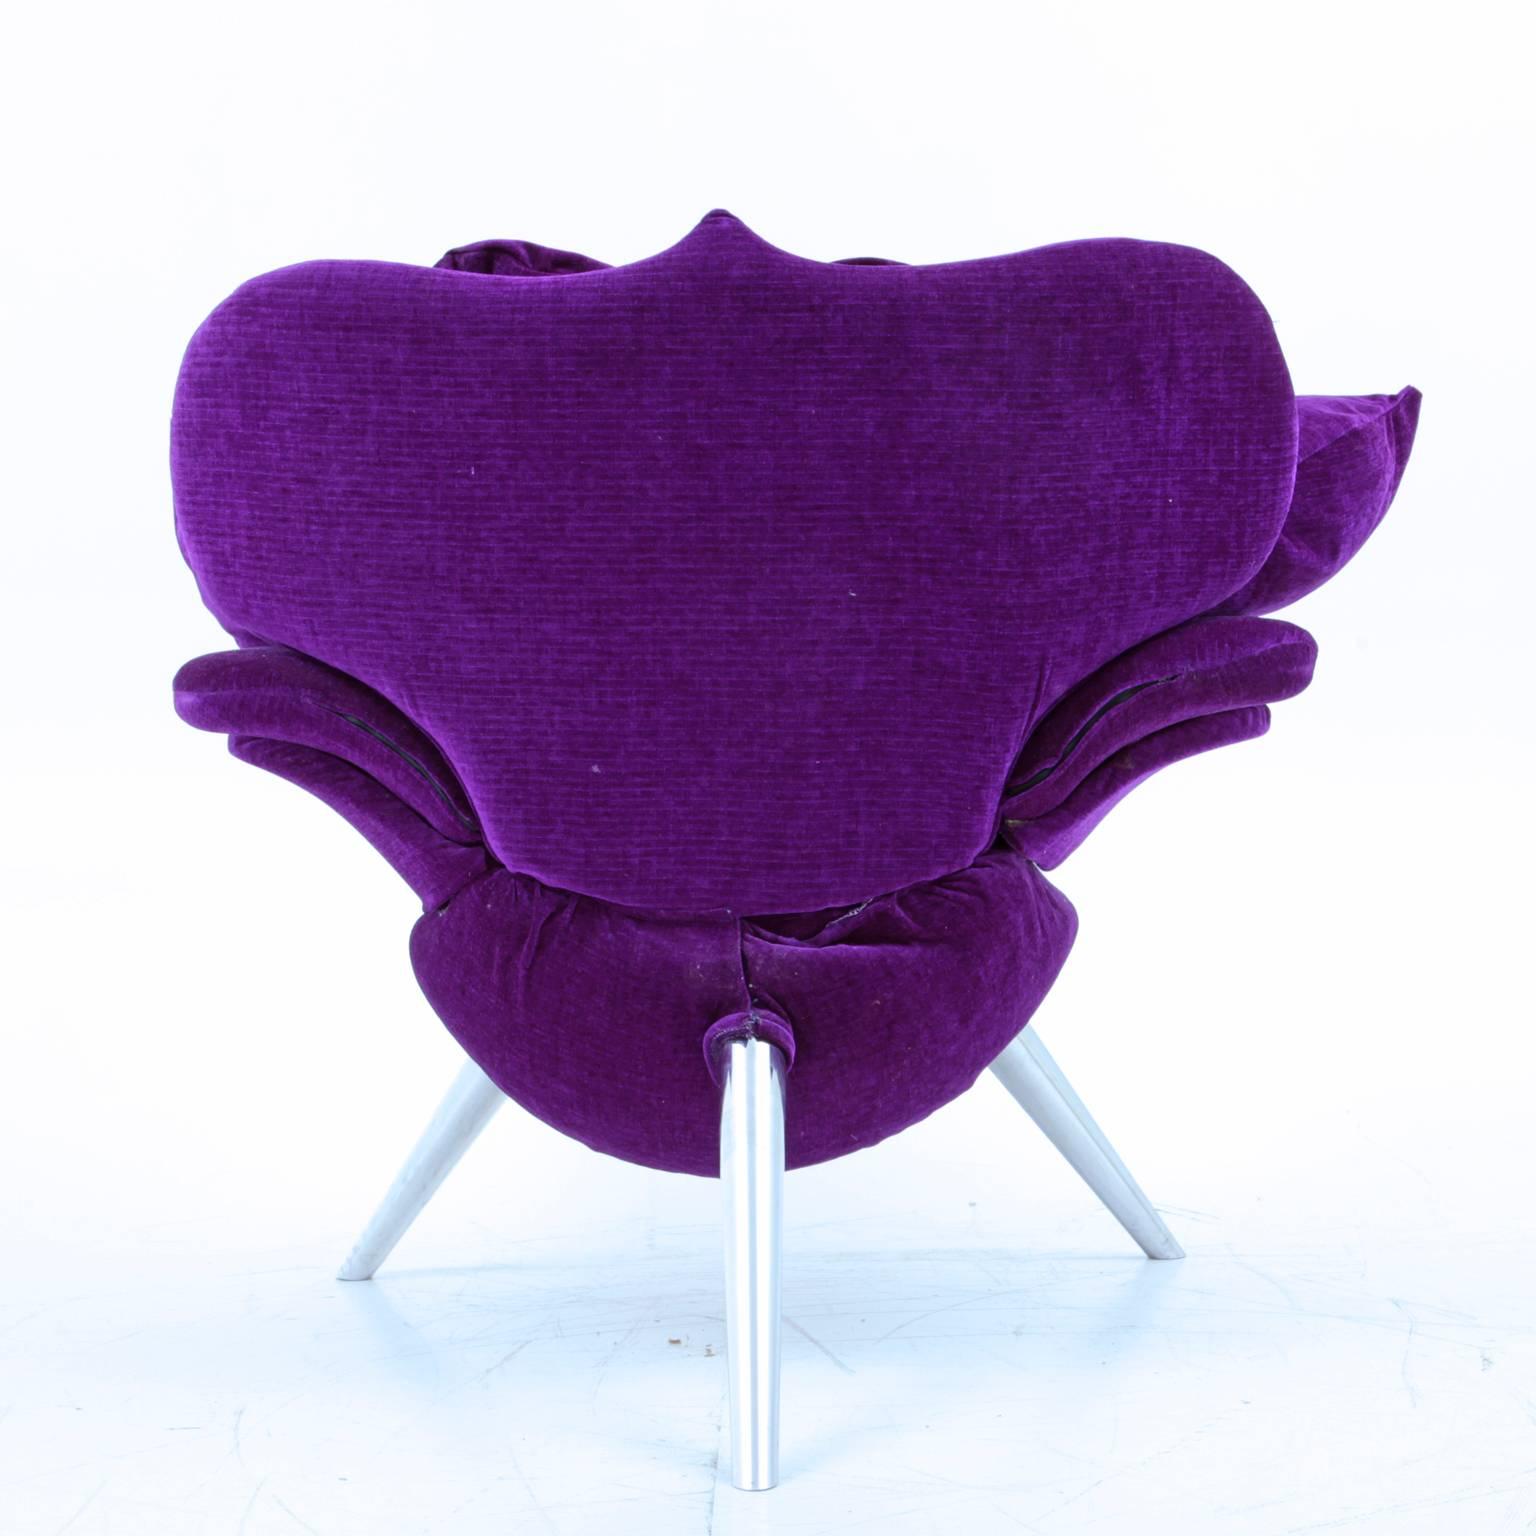 Modern Designer Chair “Rose” by Edra, designed by Masanori Umeda, 1990s